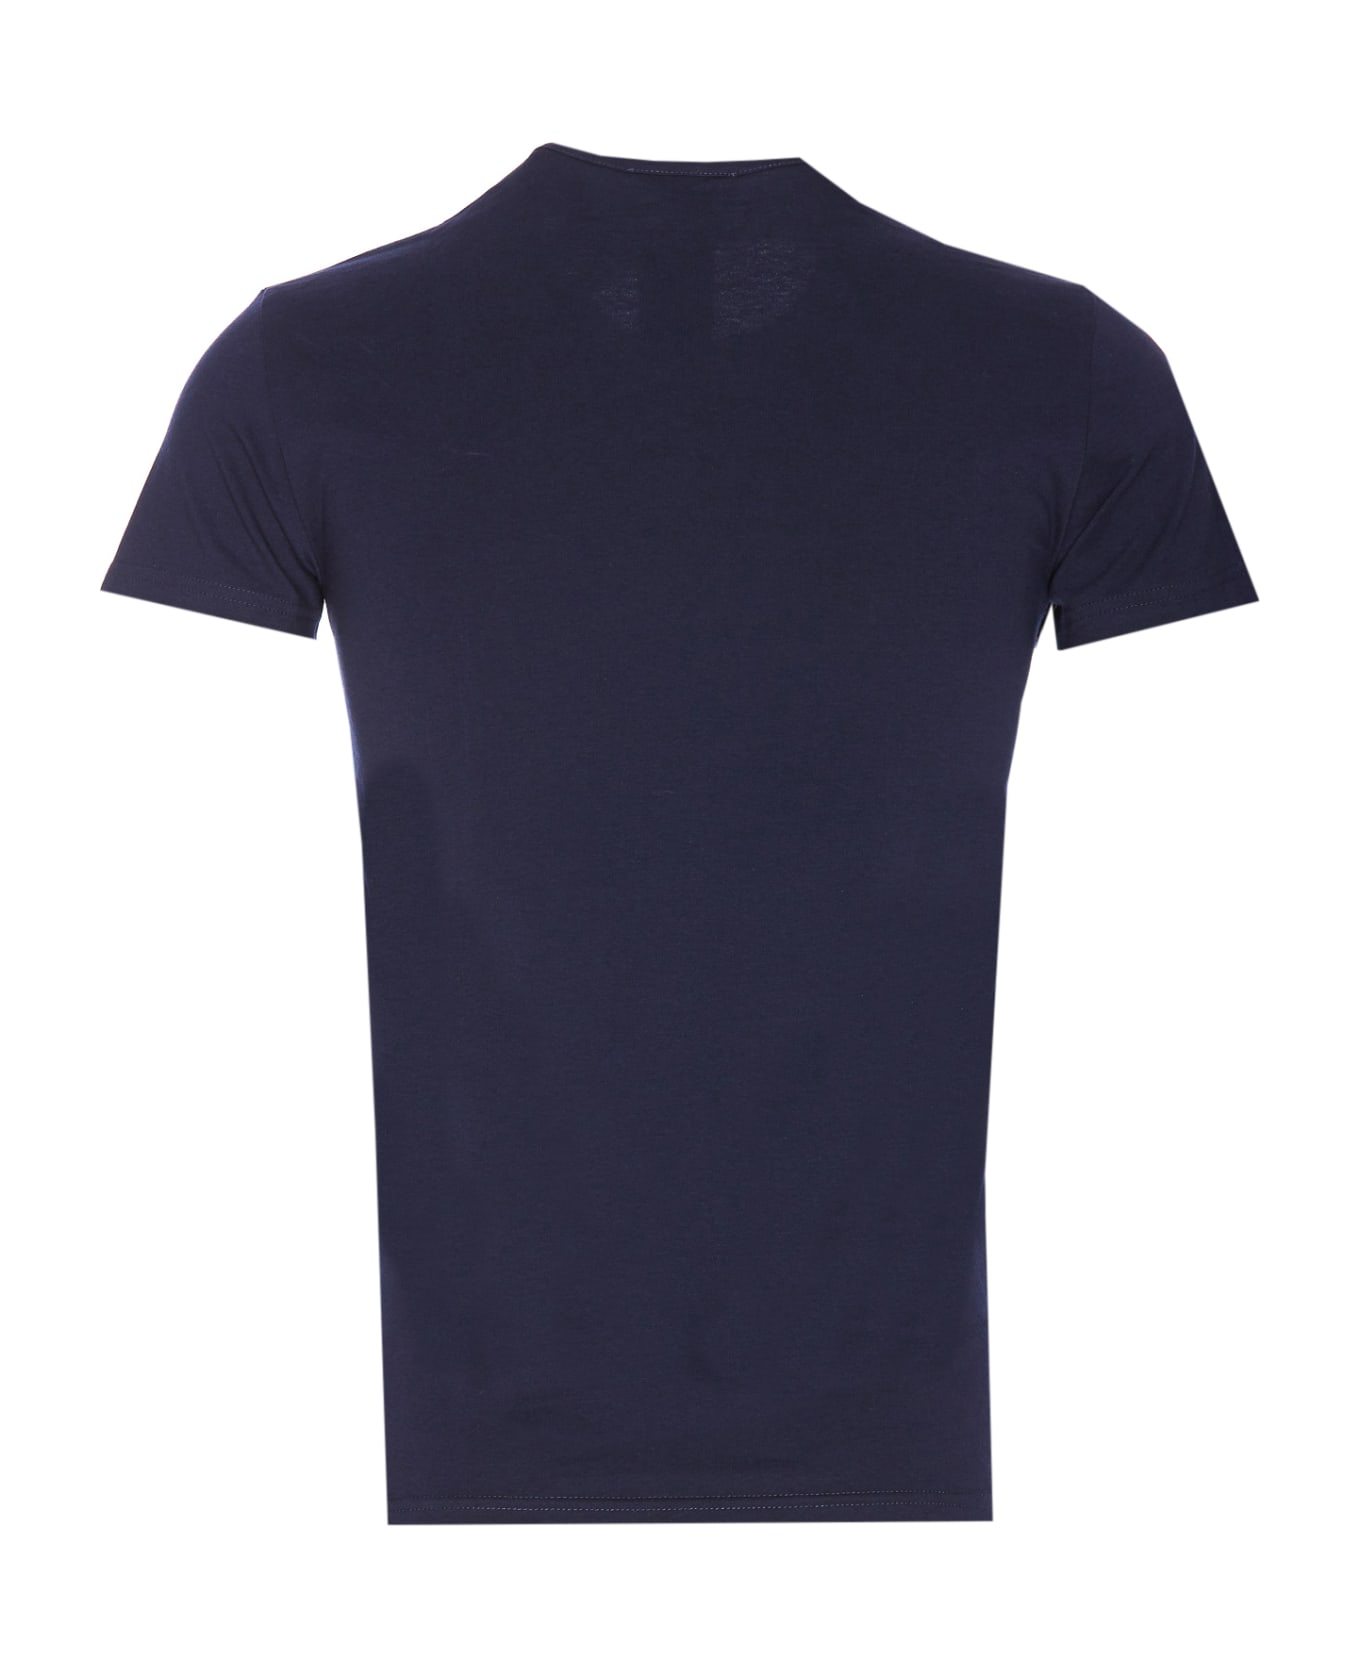 Versace Medusa Underwear T-shirt - Blue